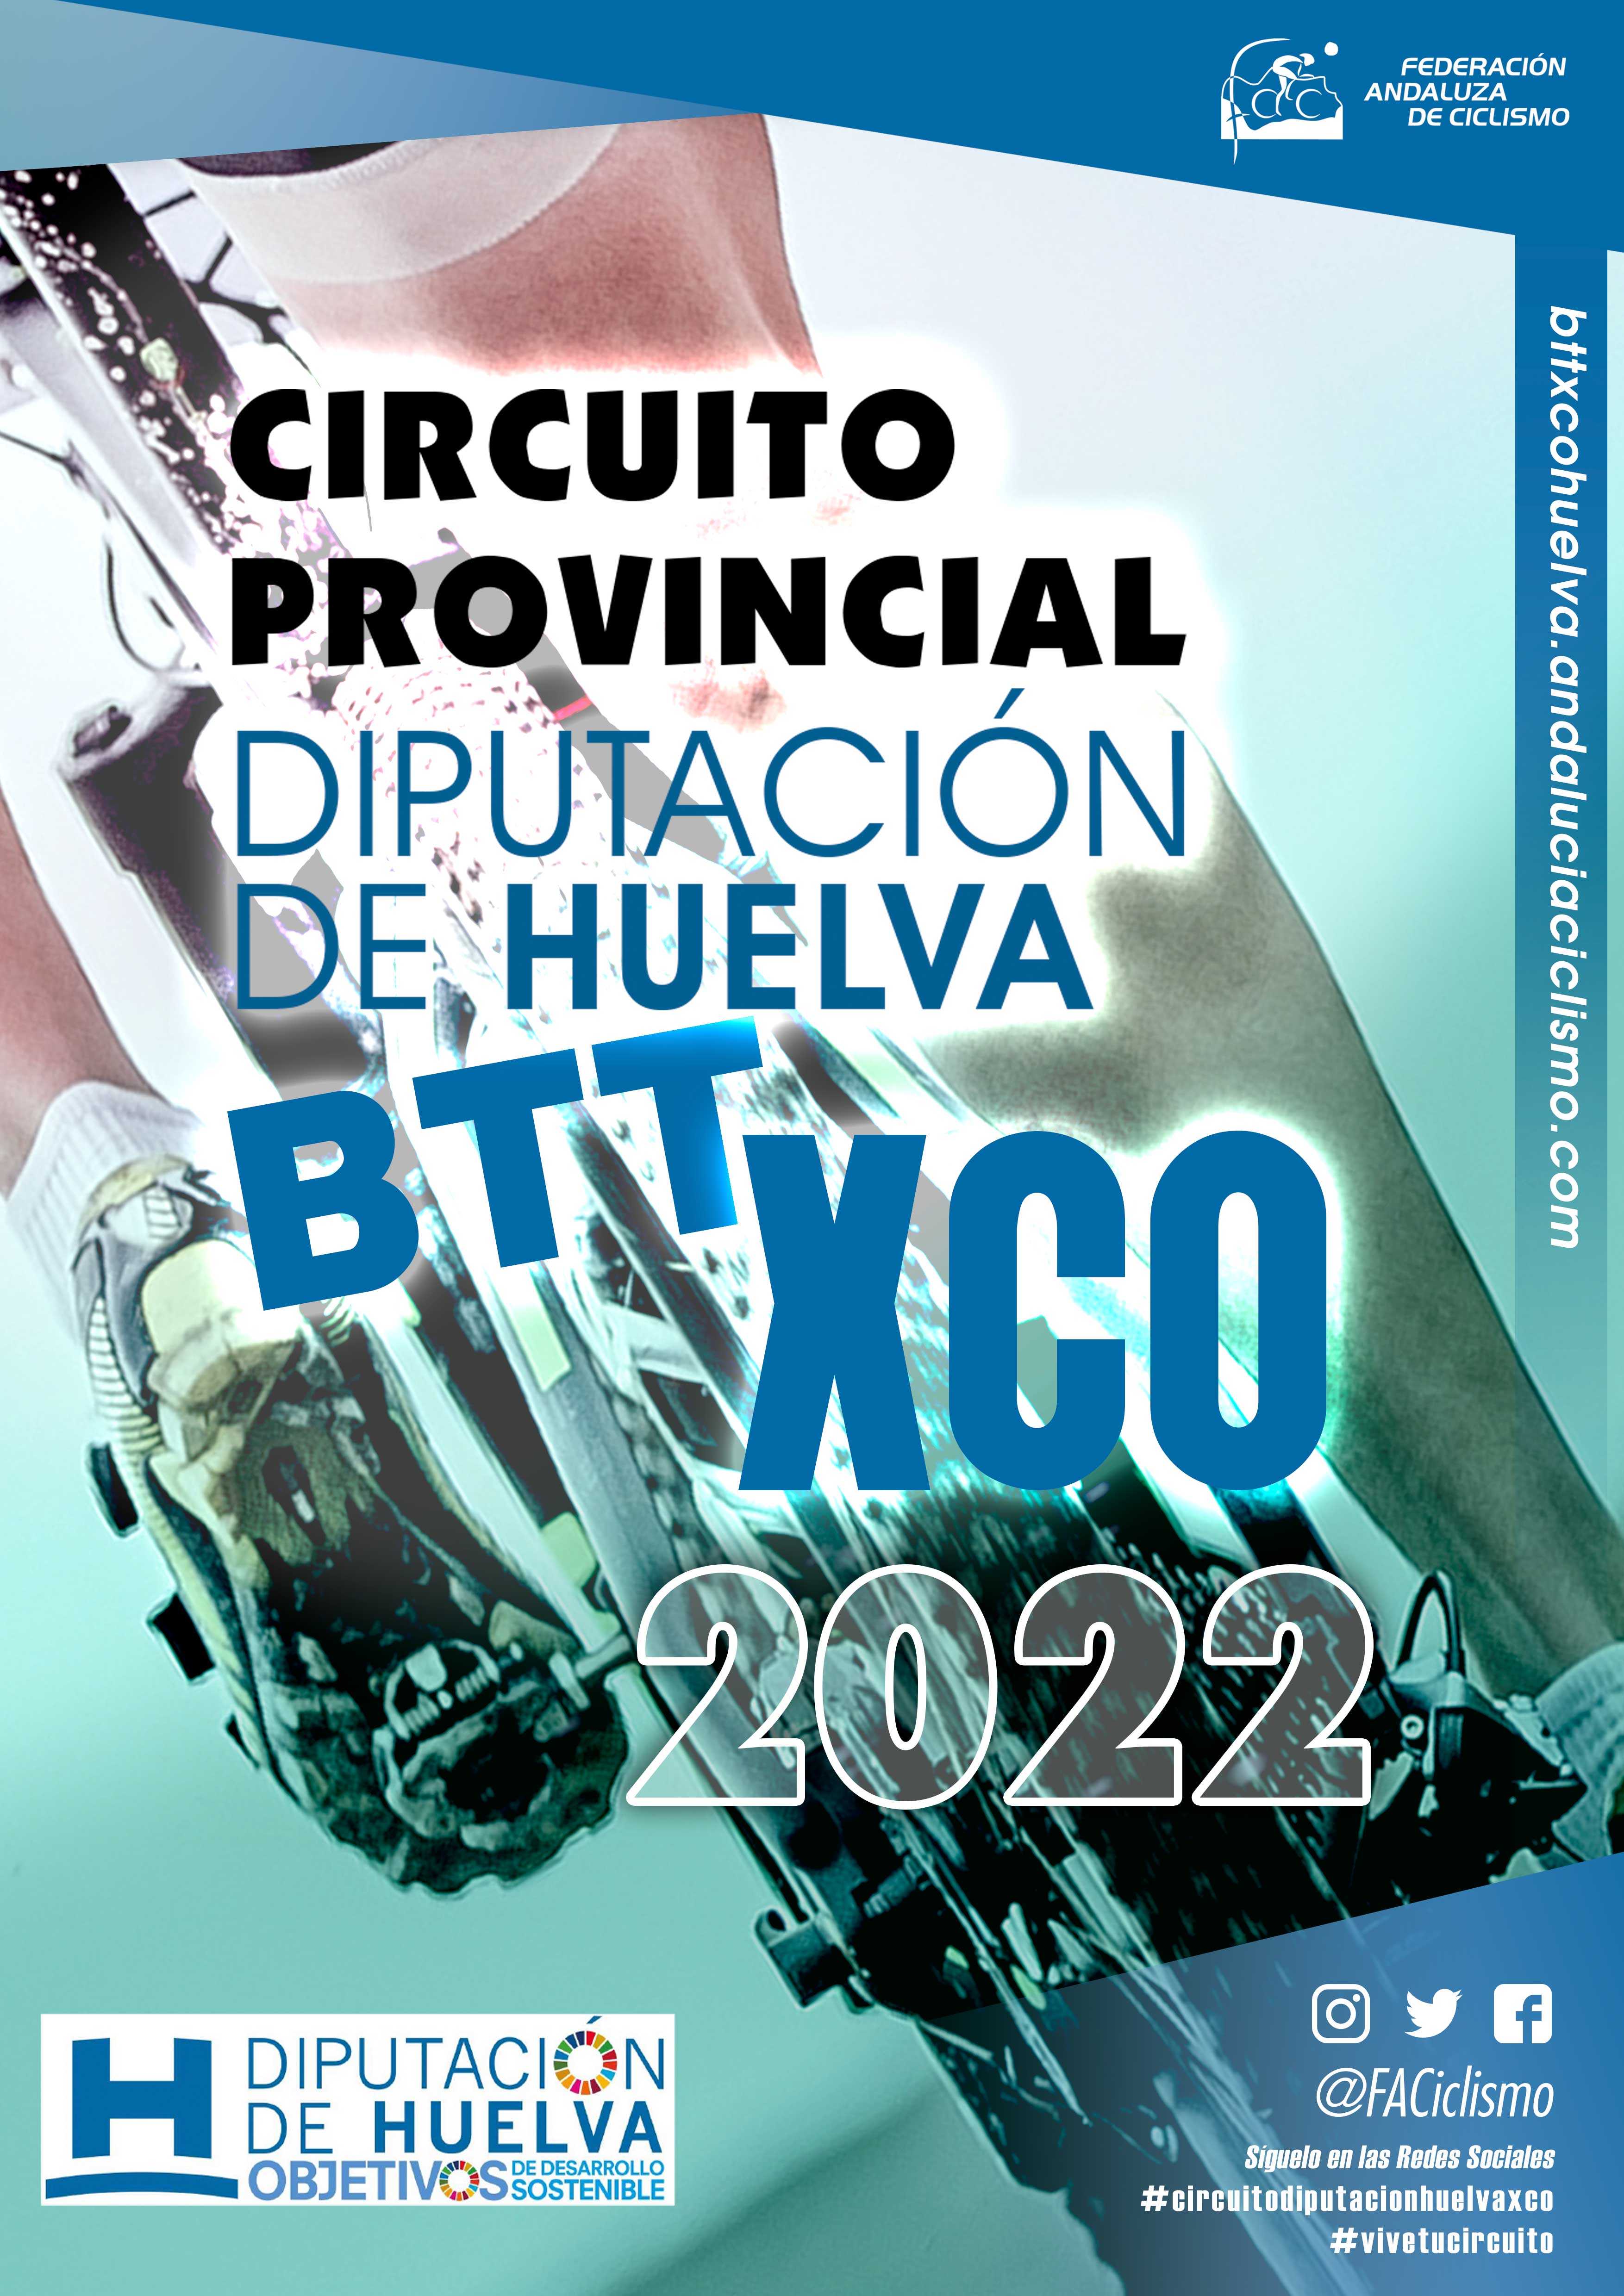 Lepe cerrará el cartel del Ranking Andaluz de XCO 2022